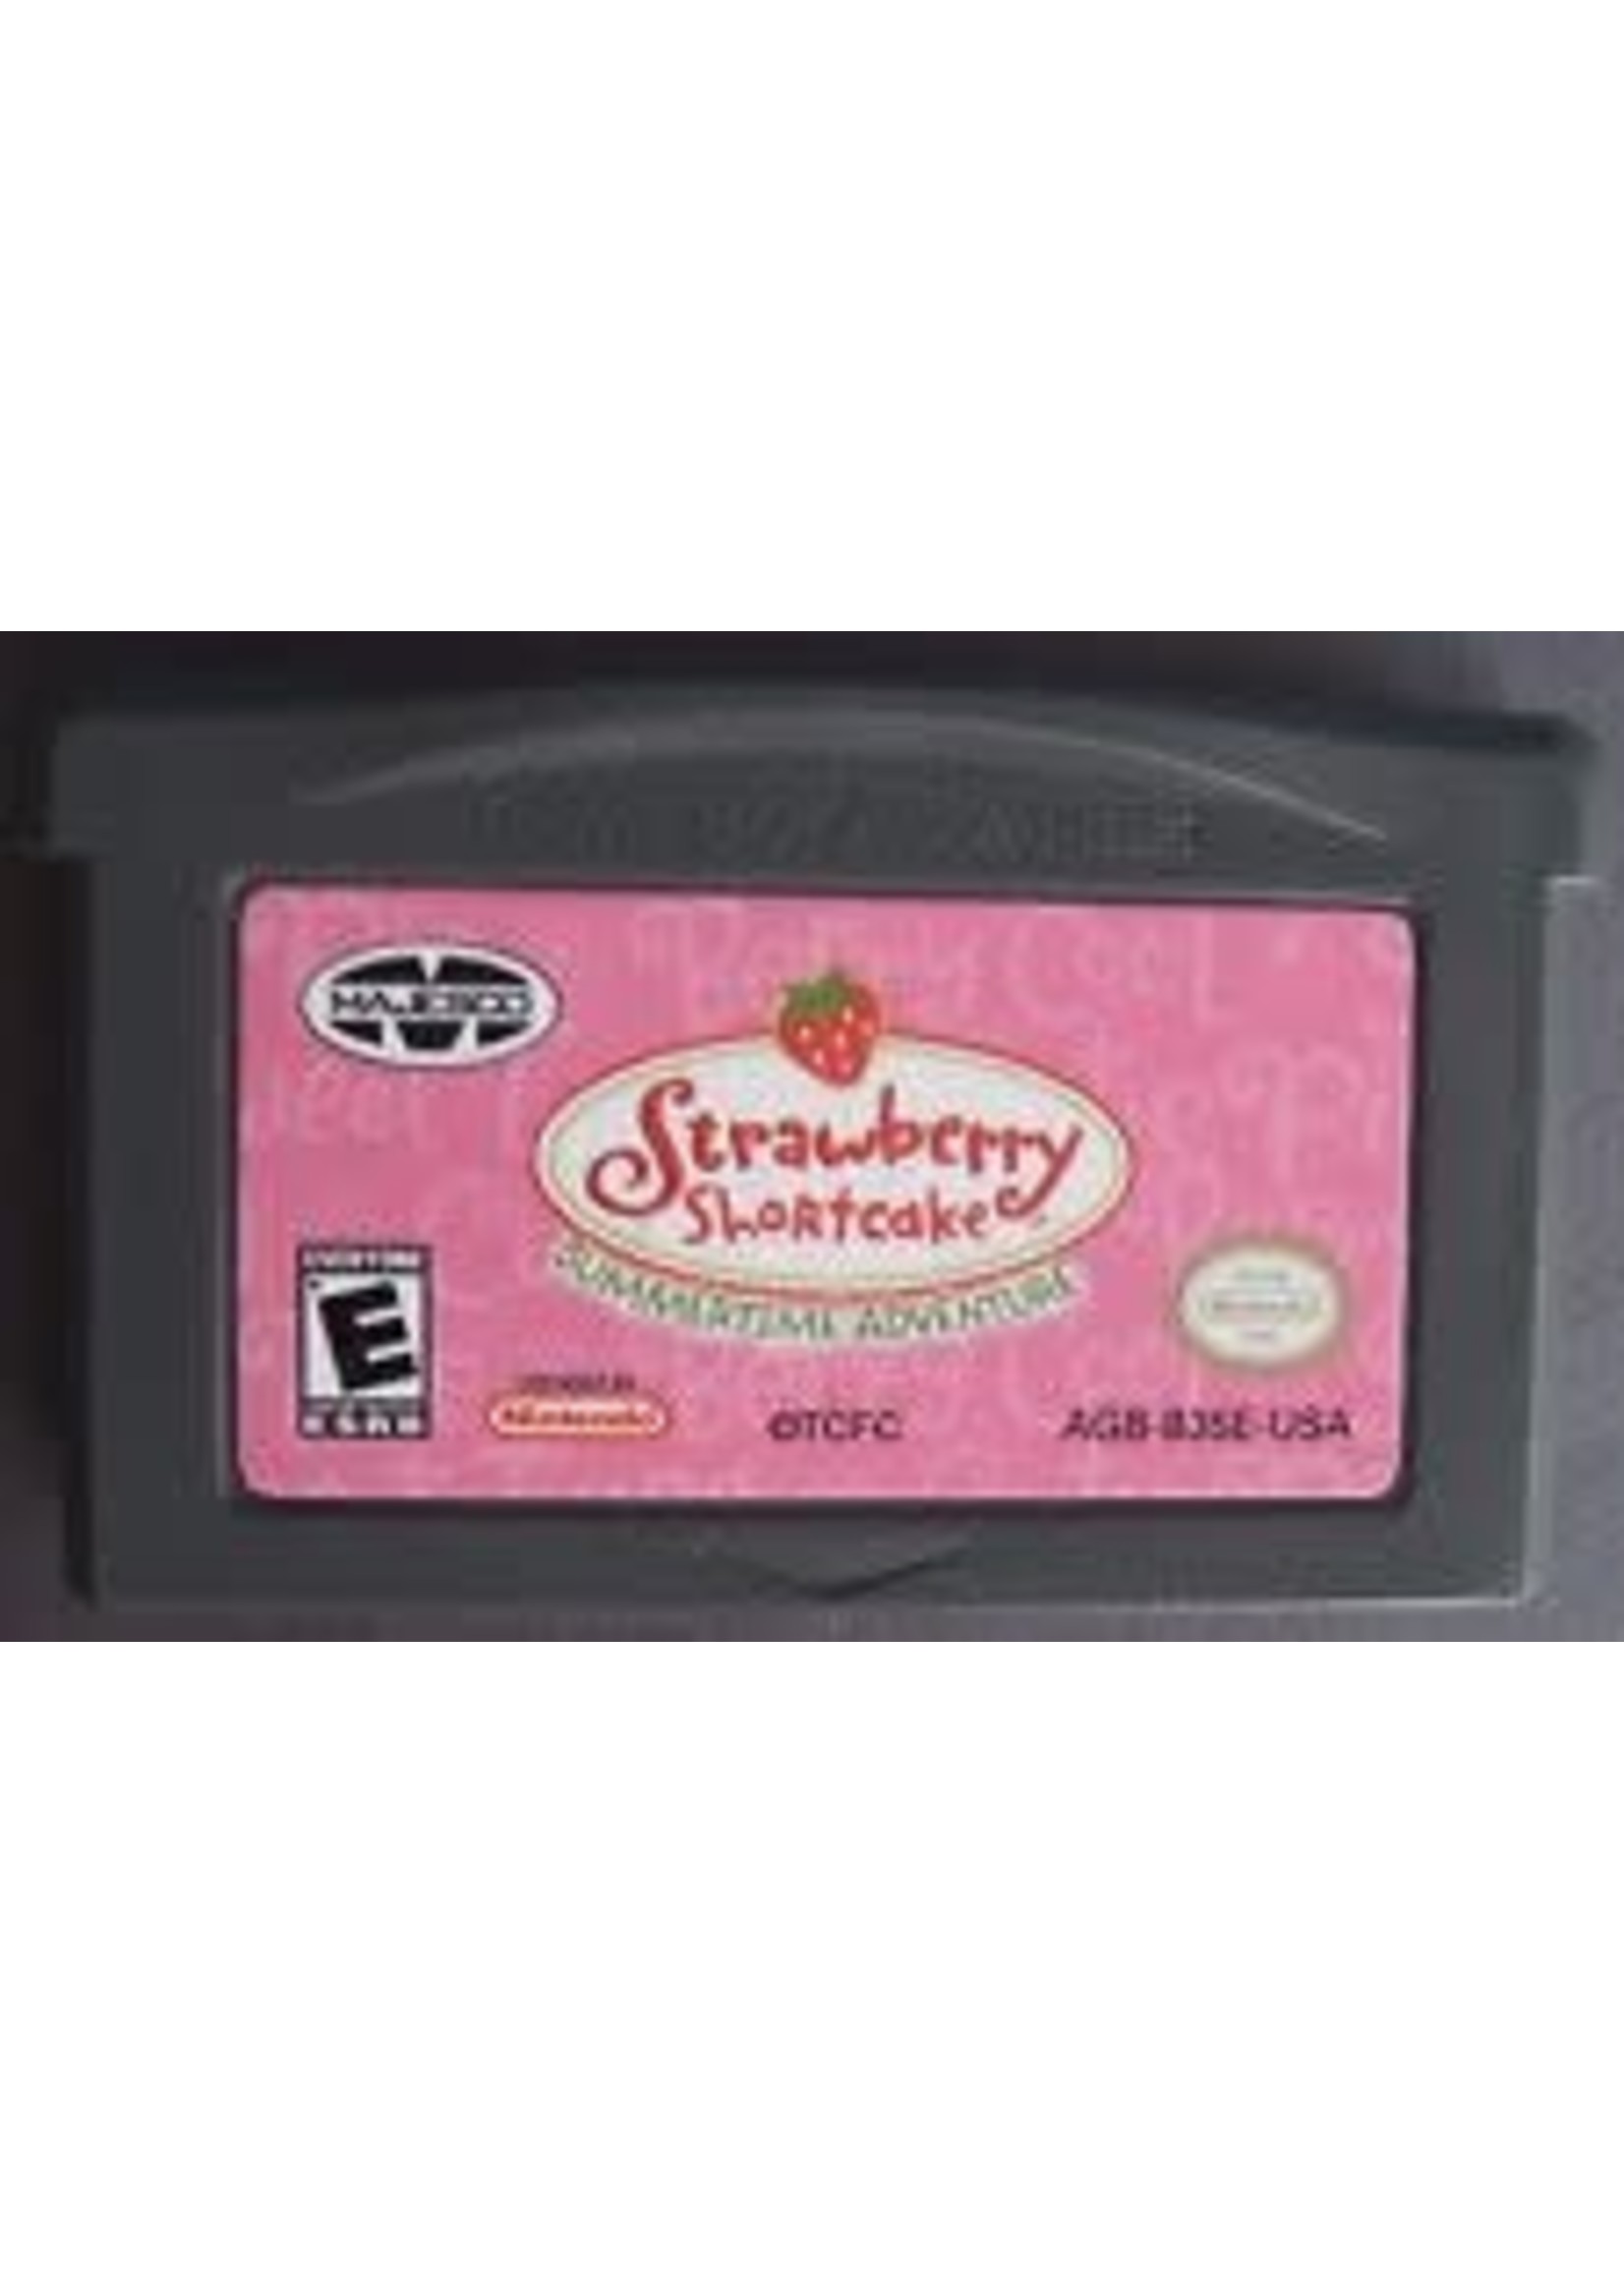 Nintendo Gameboy Advance Strawberry Shortcake Sumertime Adventure